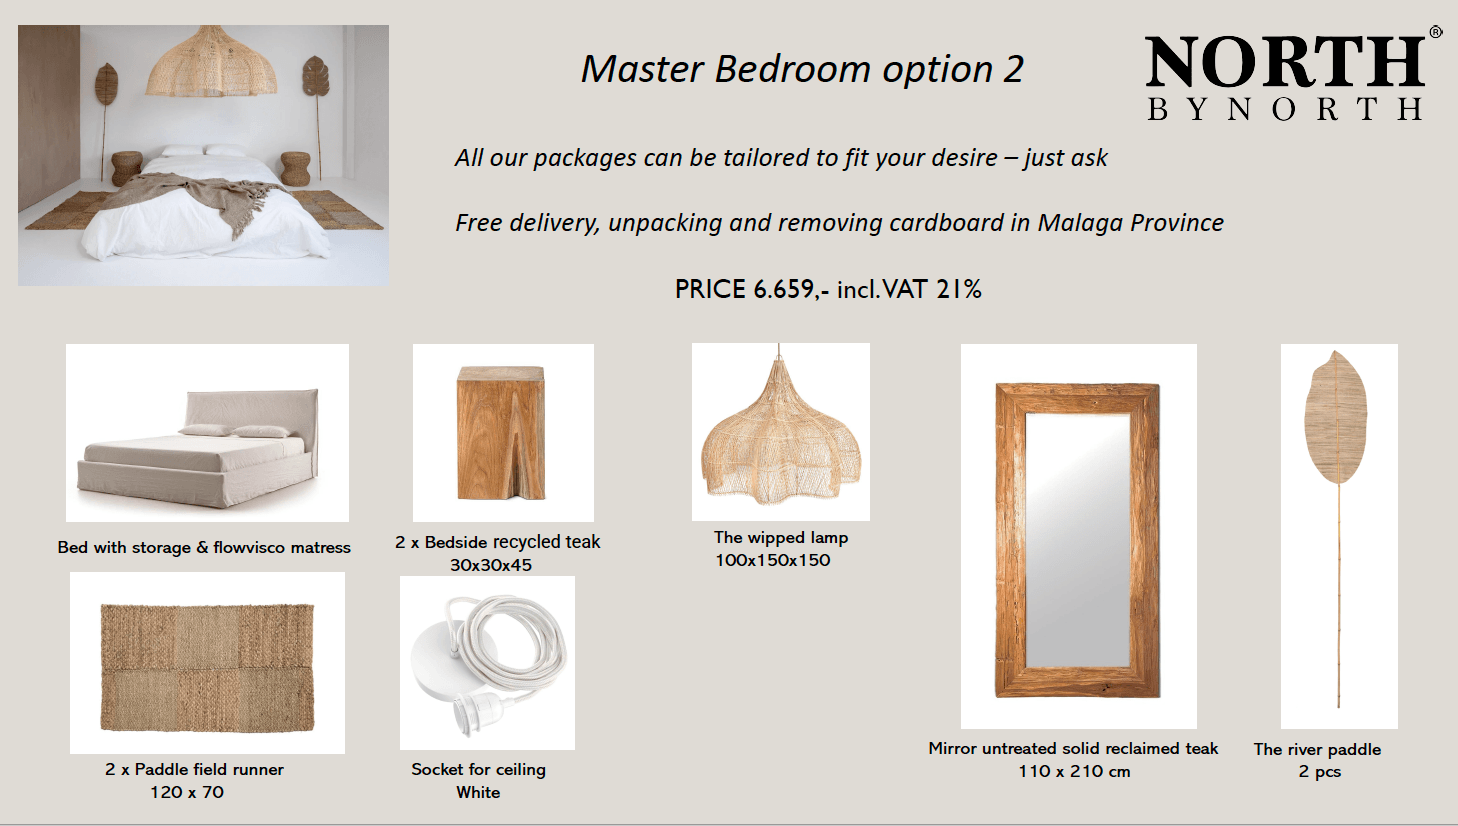 Master Bedroom option 2